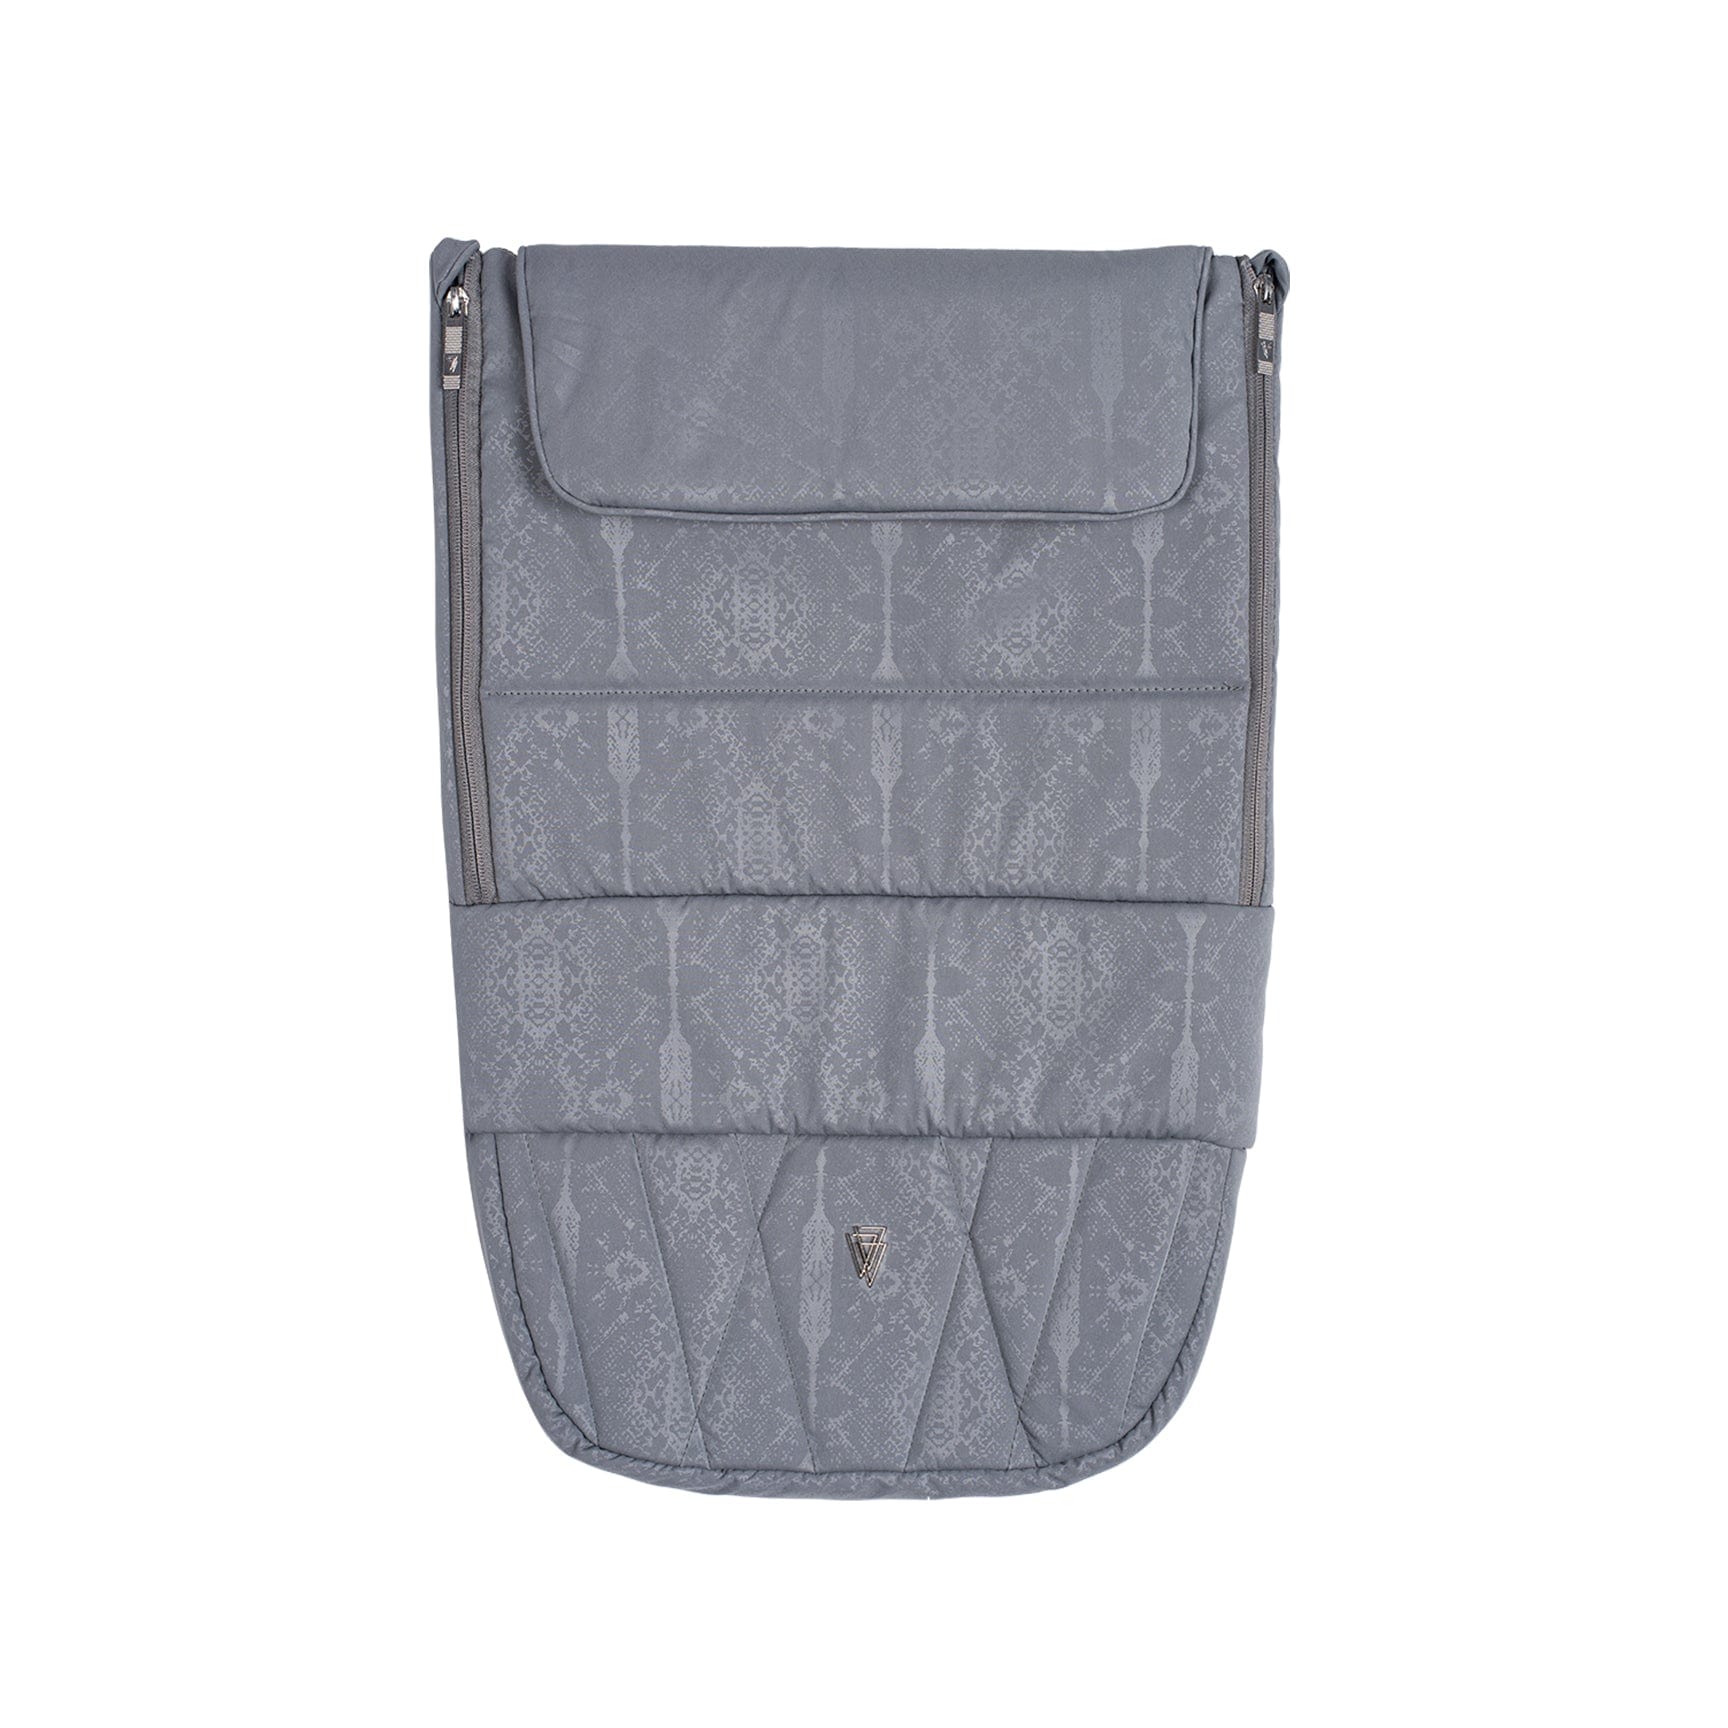 Venicci Empire Stroller & Accessory Pack in Urban Grey Pushchairs & Buggies 13176-URN-GRY 5905261331175